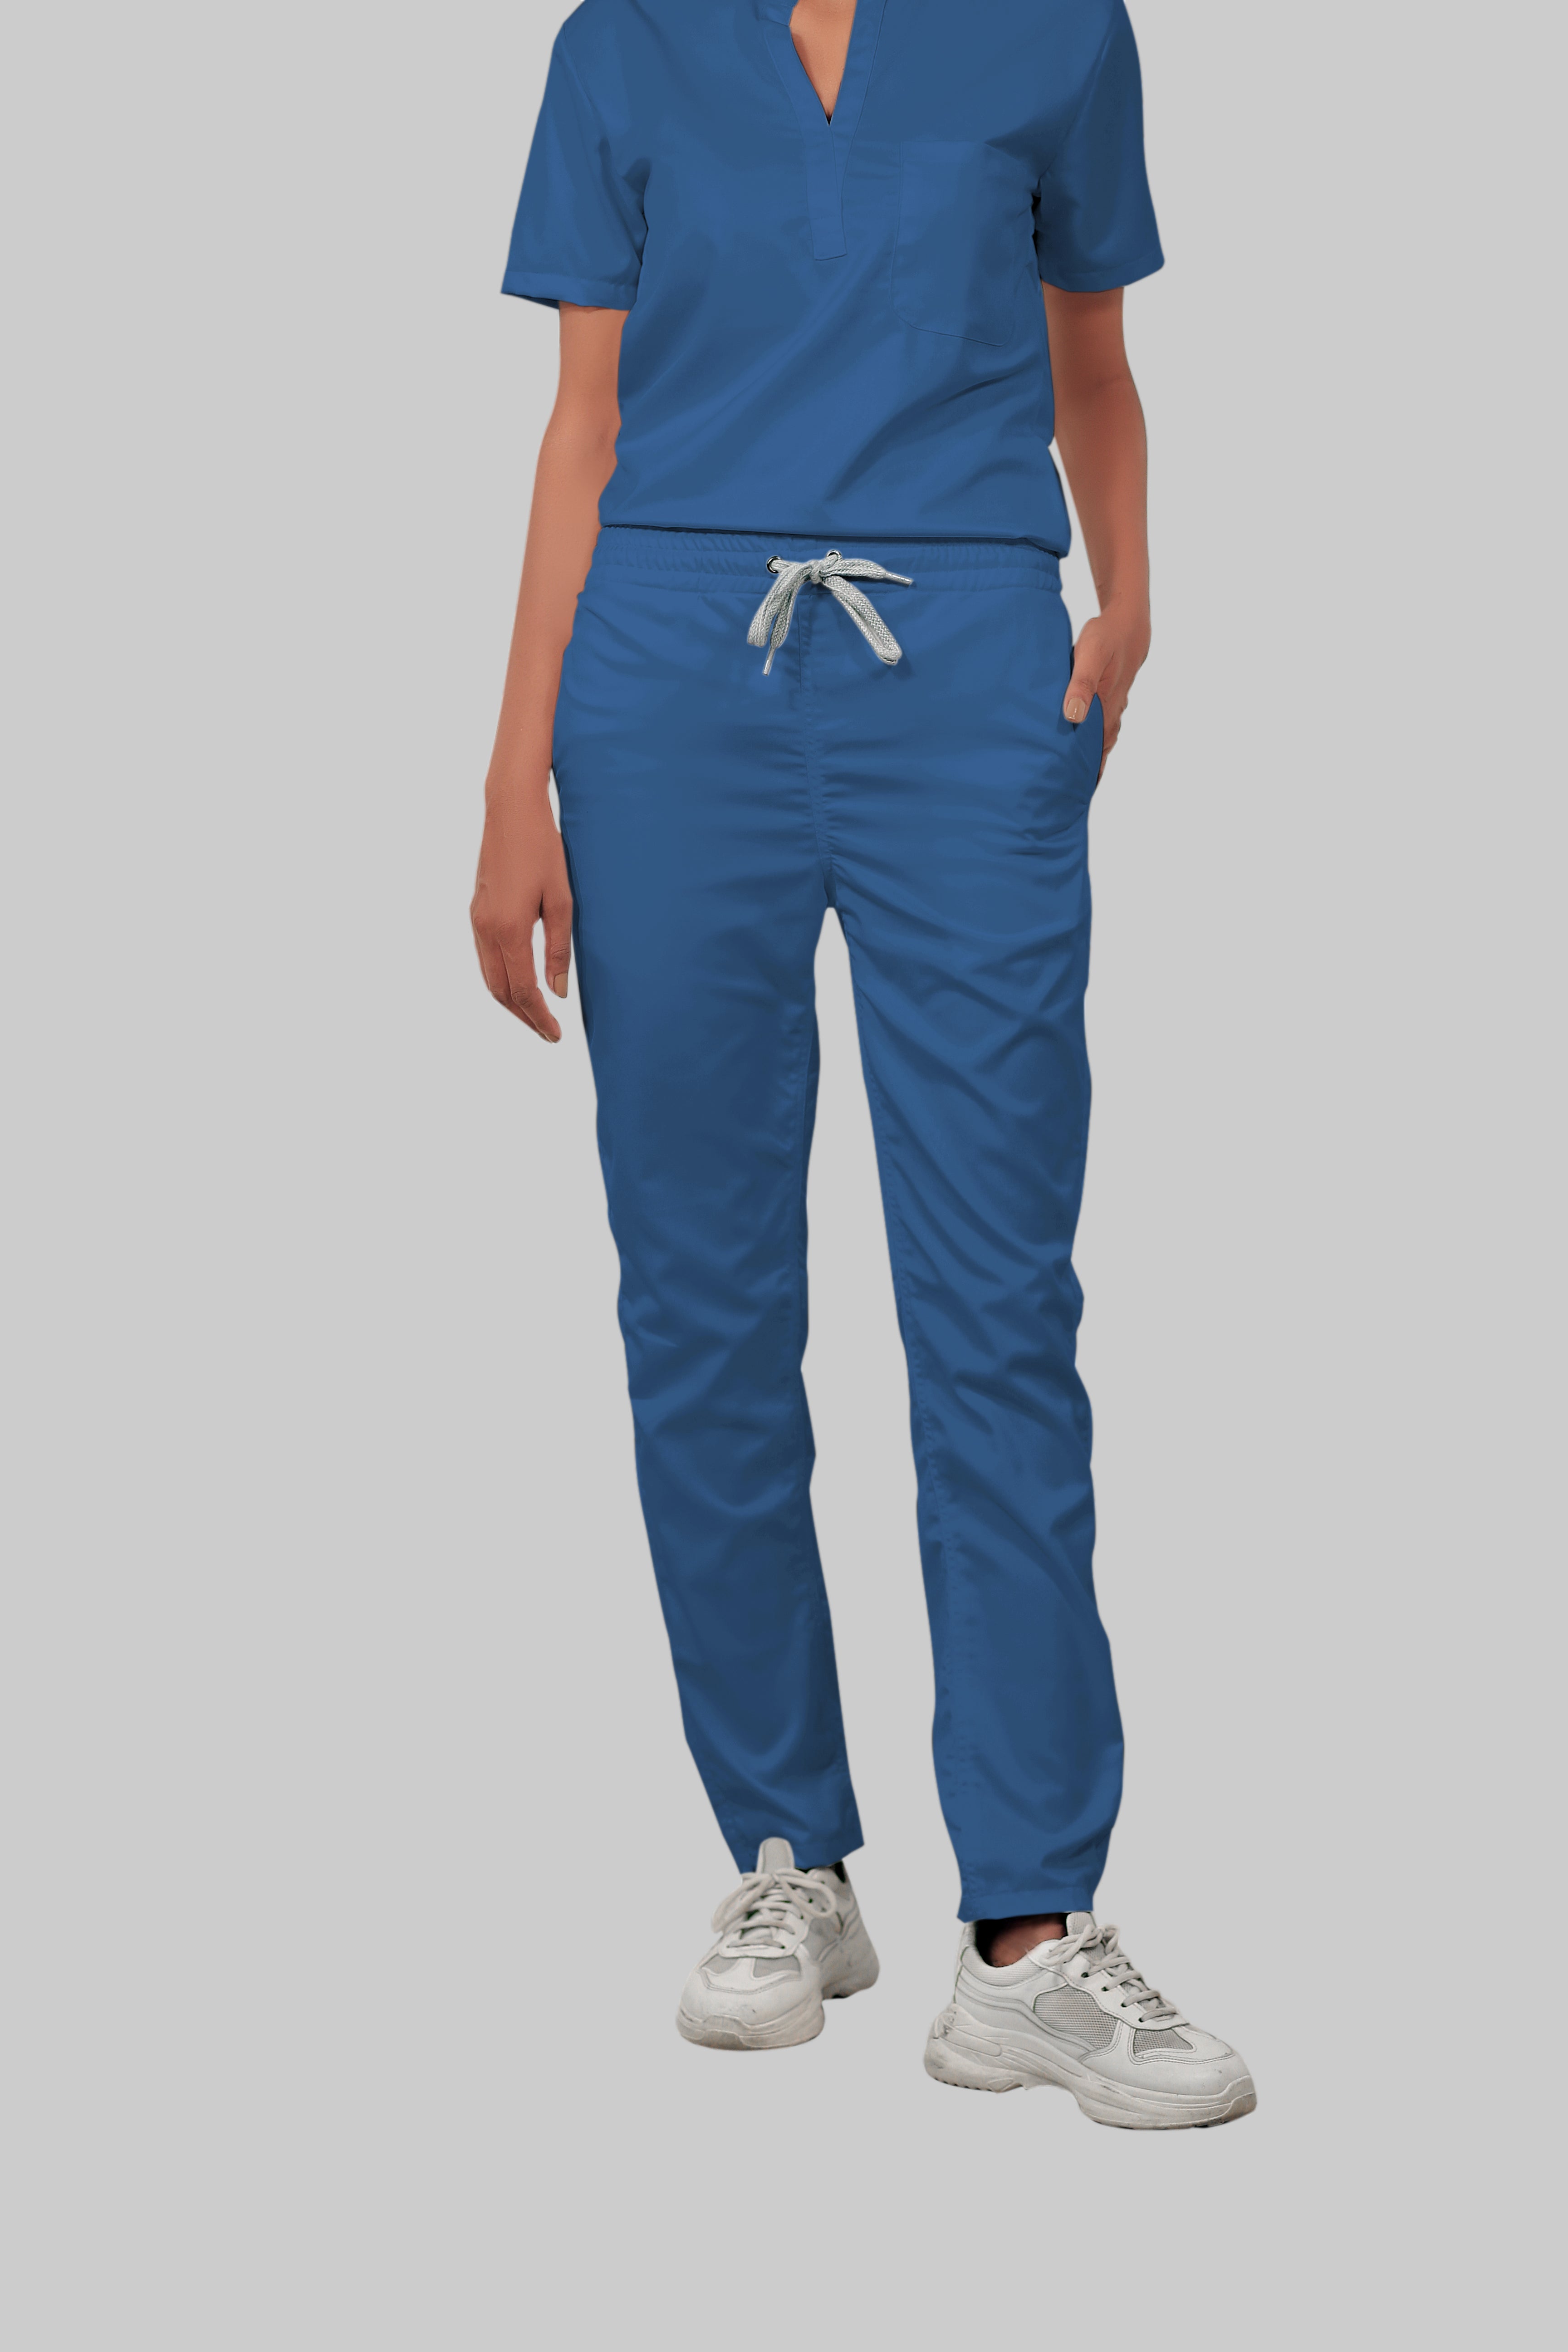 Buy Superb Uniforms Polyester  Viscose Royal Blue Best Scrub Pant for  Women SUW MWSPRyl01 Size 42 inch Online At Best Price On Moglix